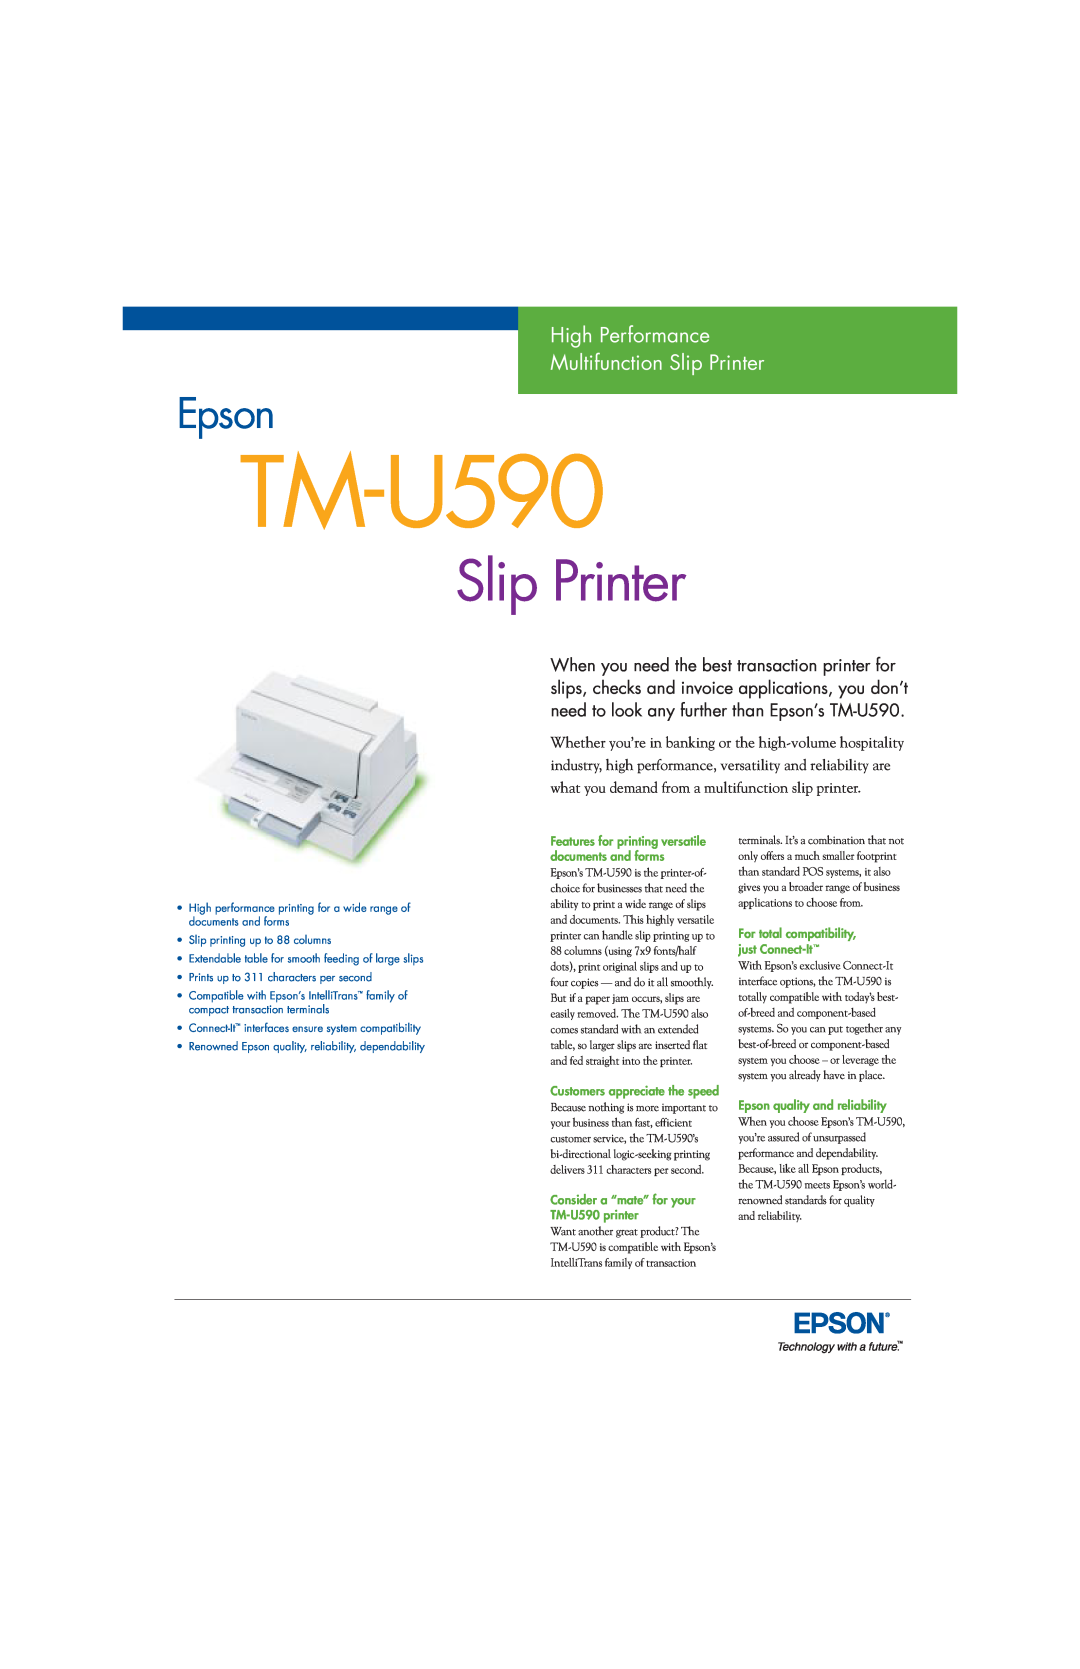 Epson TM-U560 manual TM-U590, Epson, High Performance Multifunction Slip Printer, Customers appreciate the speed 